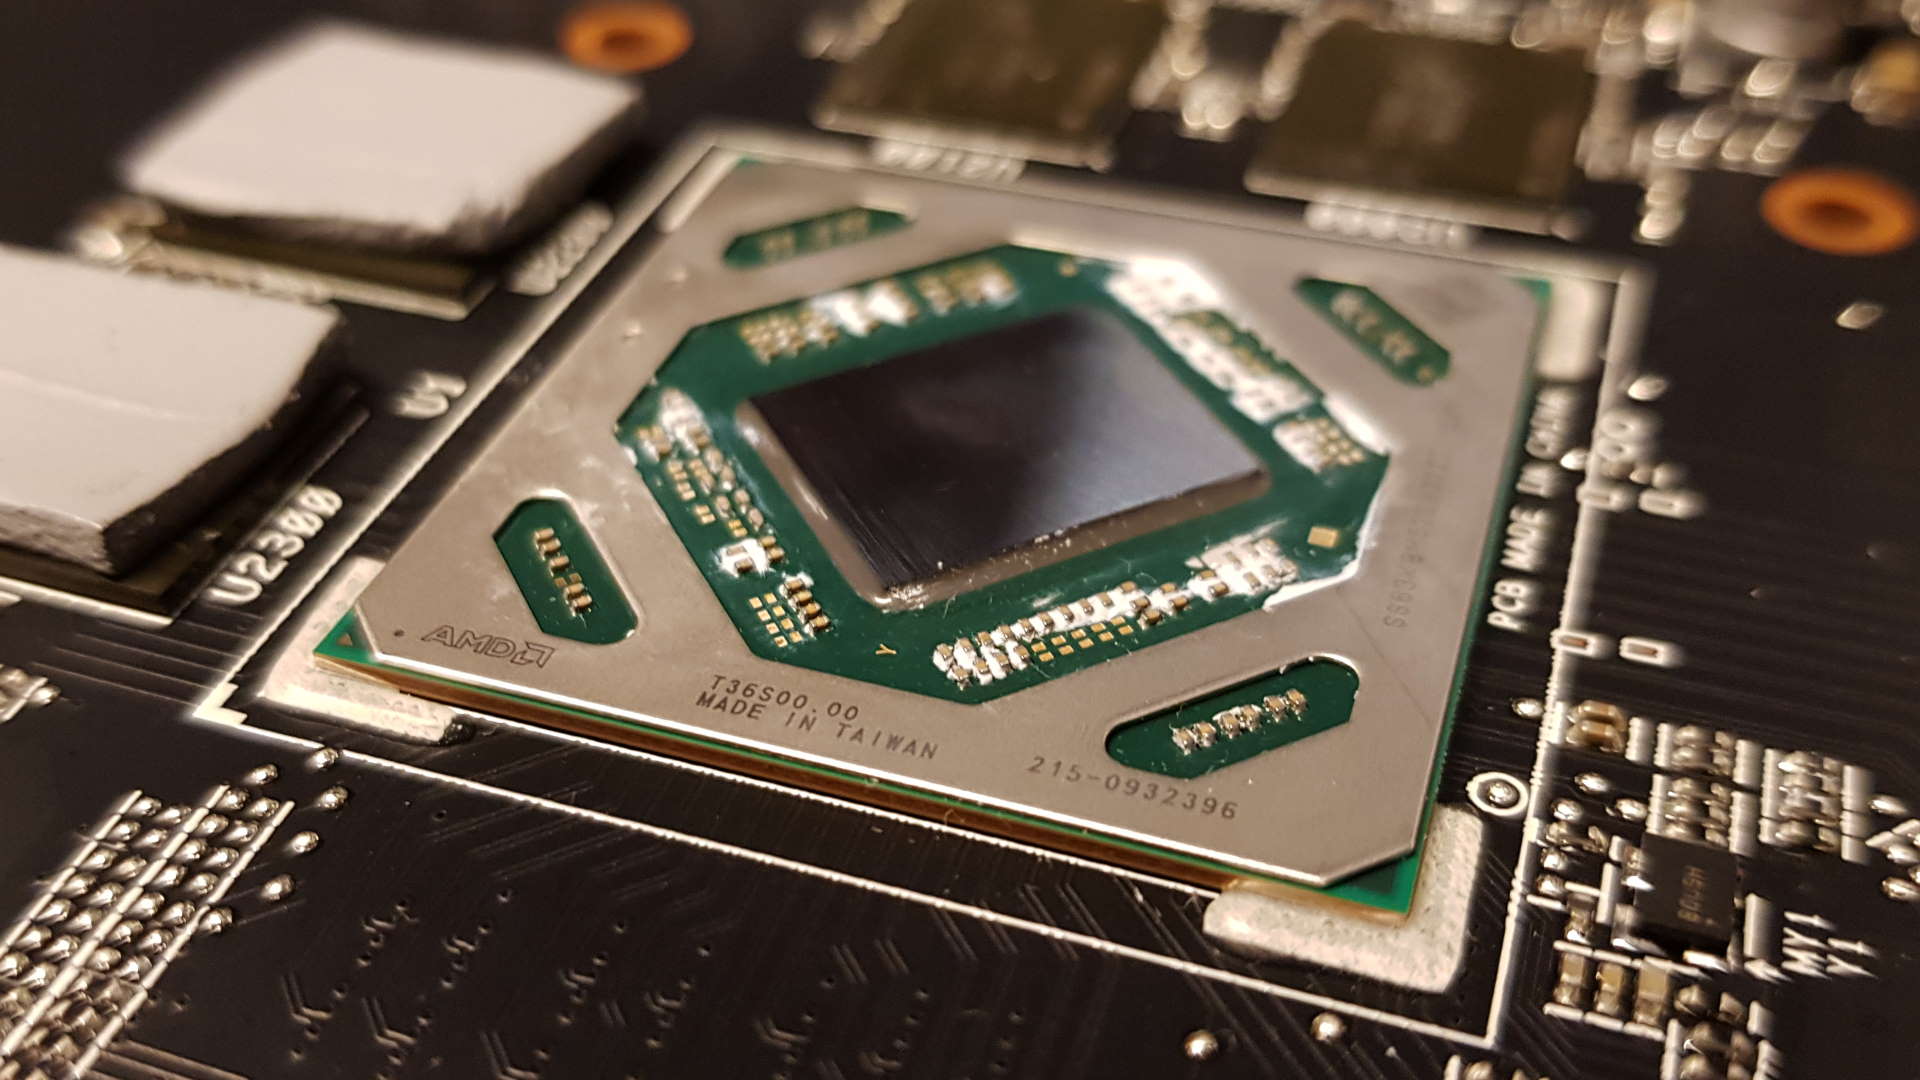 Intel Pentium IV processors potest dimittere latere novum RDNA III GPUs in nuper MMXXII "